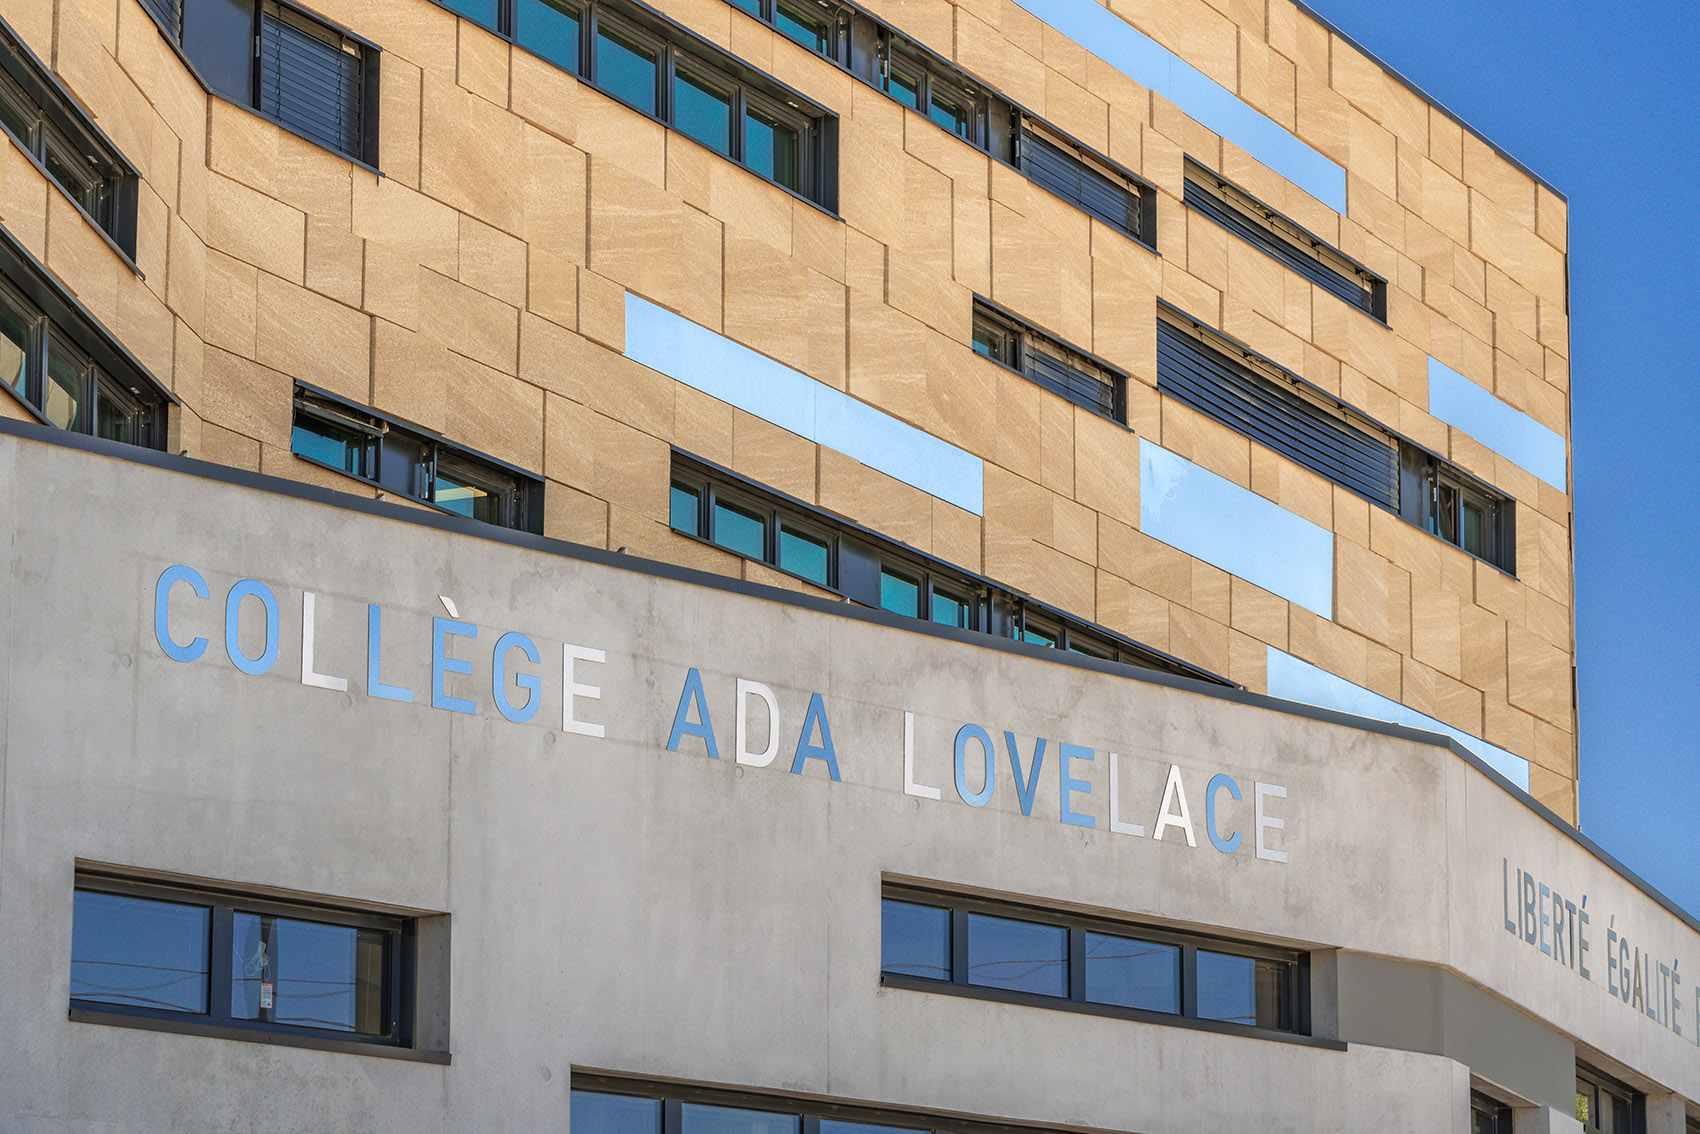 Ada Lovelace中学/有机、环保的设计和运作方式-44